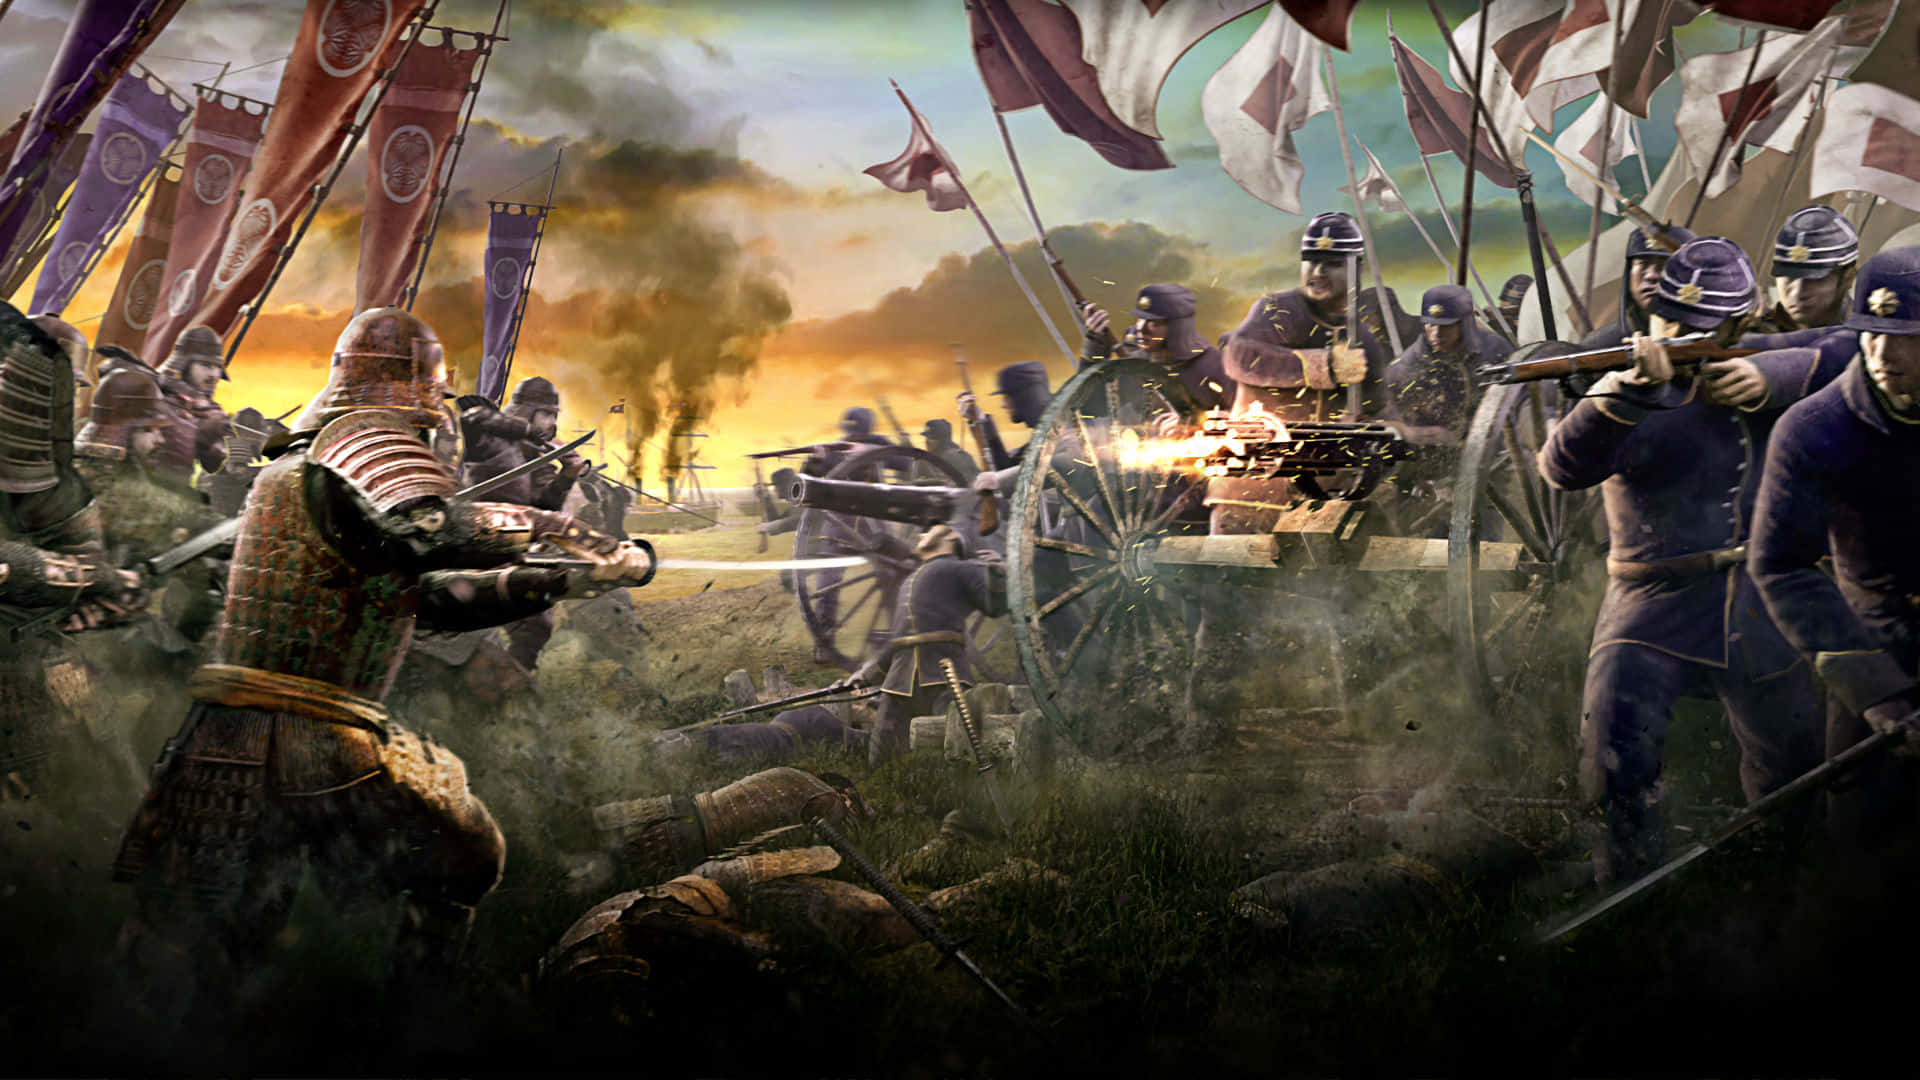 An Epic Battle In The Popular Strategy Game "Total War: Shogun 2"